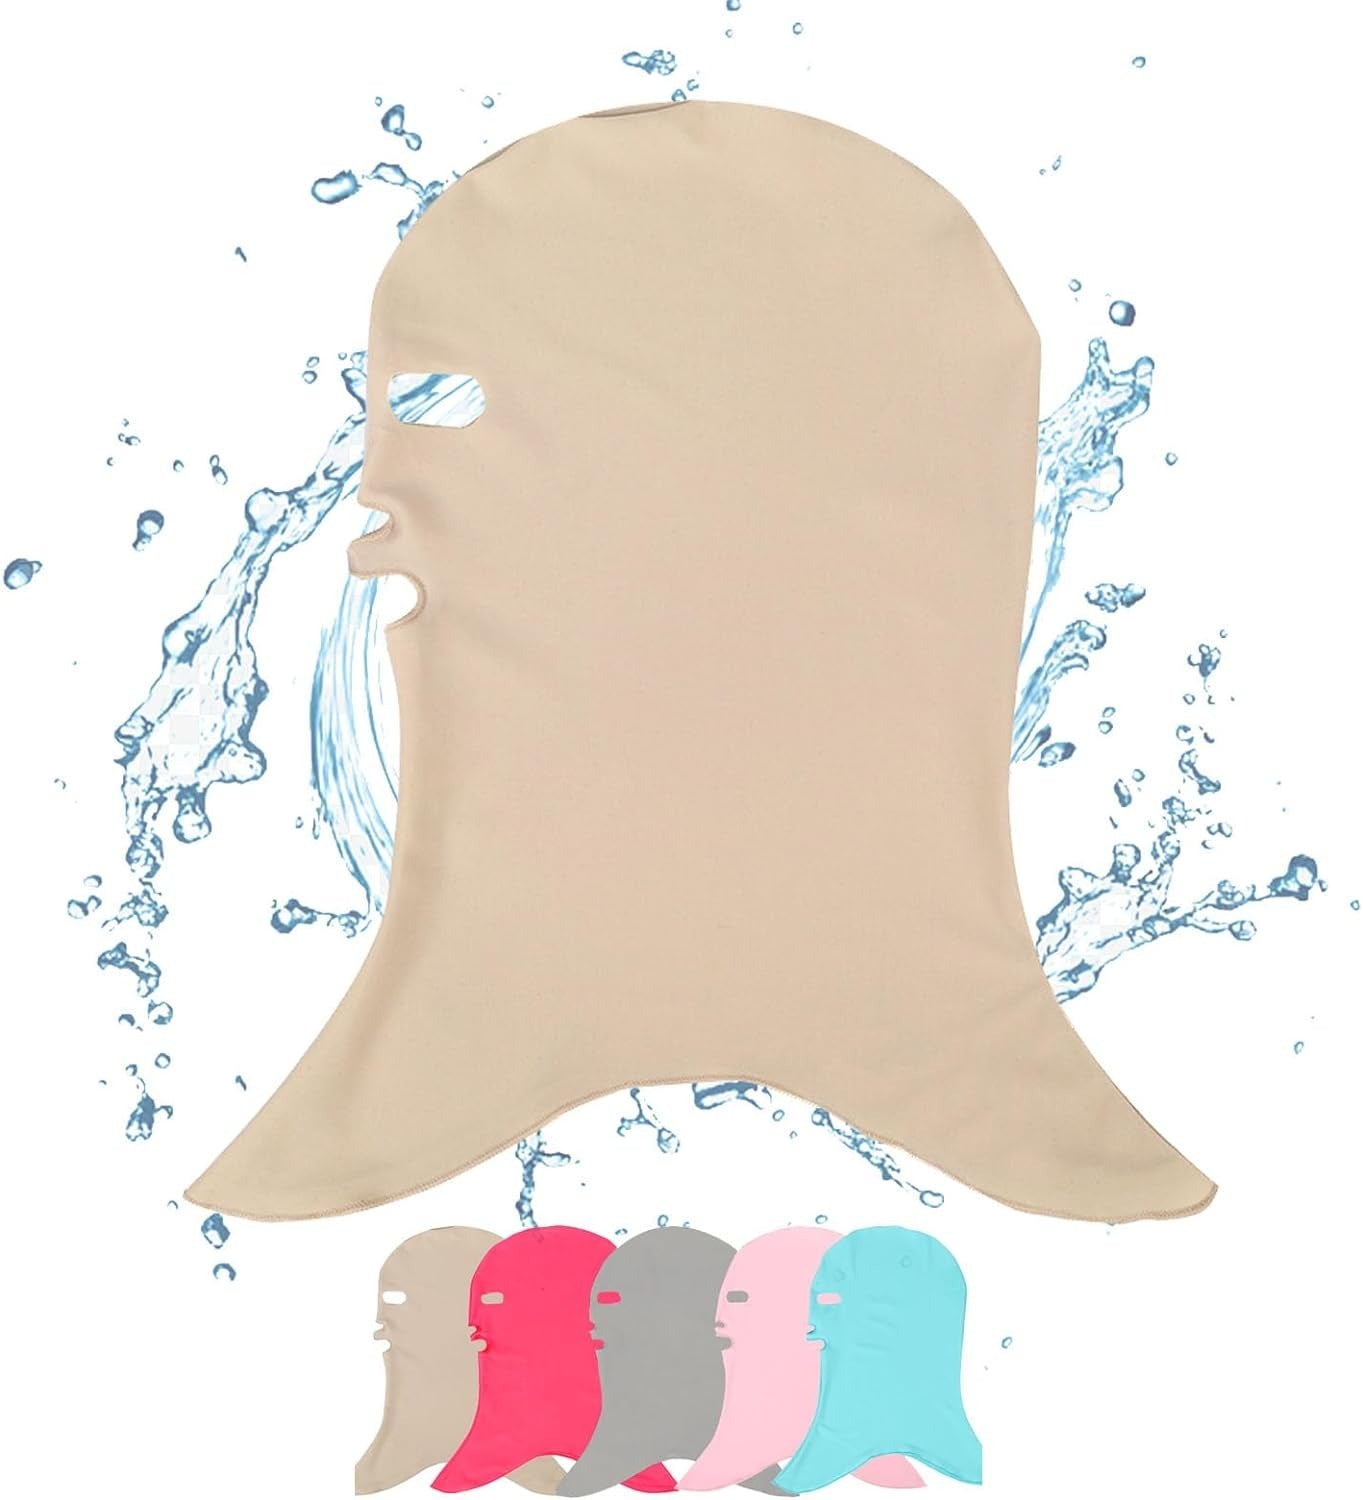 Facekini - Facekini Mask,Facekini UV Protection Mask Swim Cap